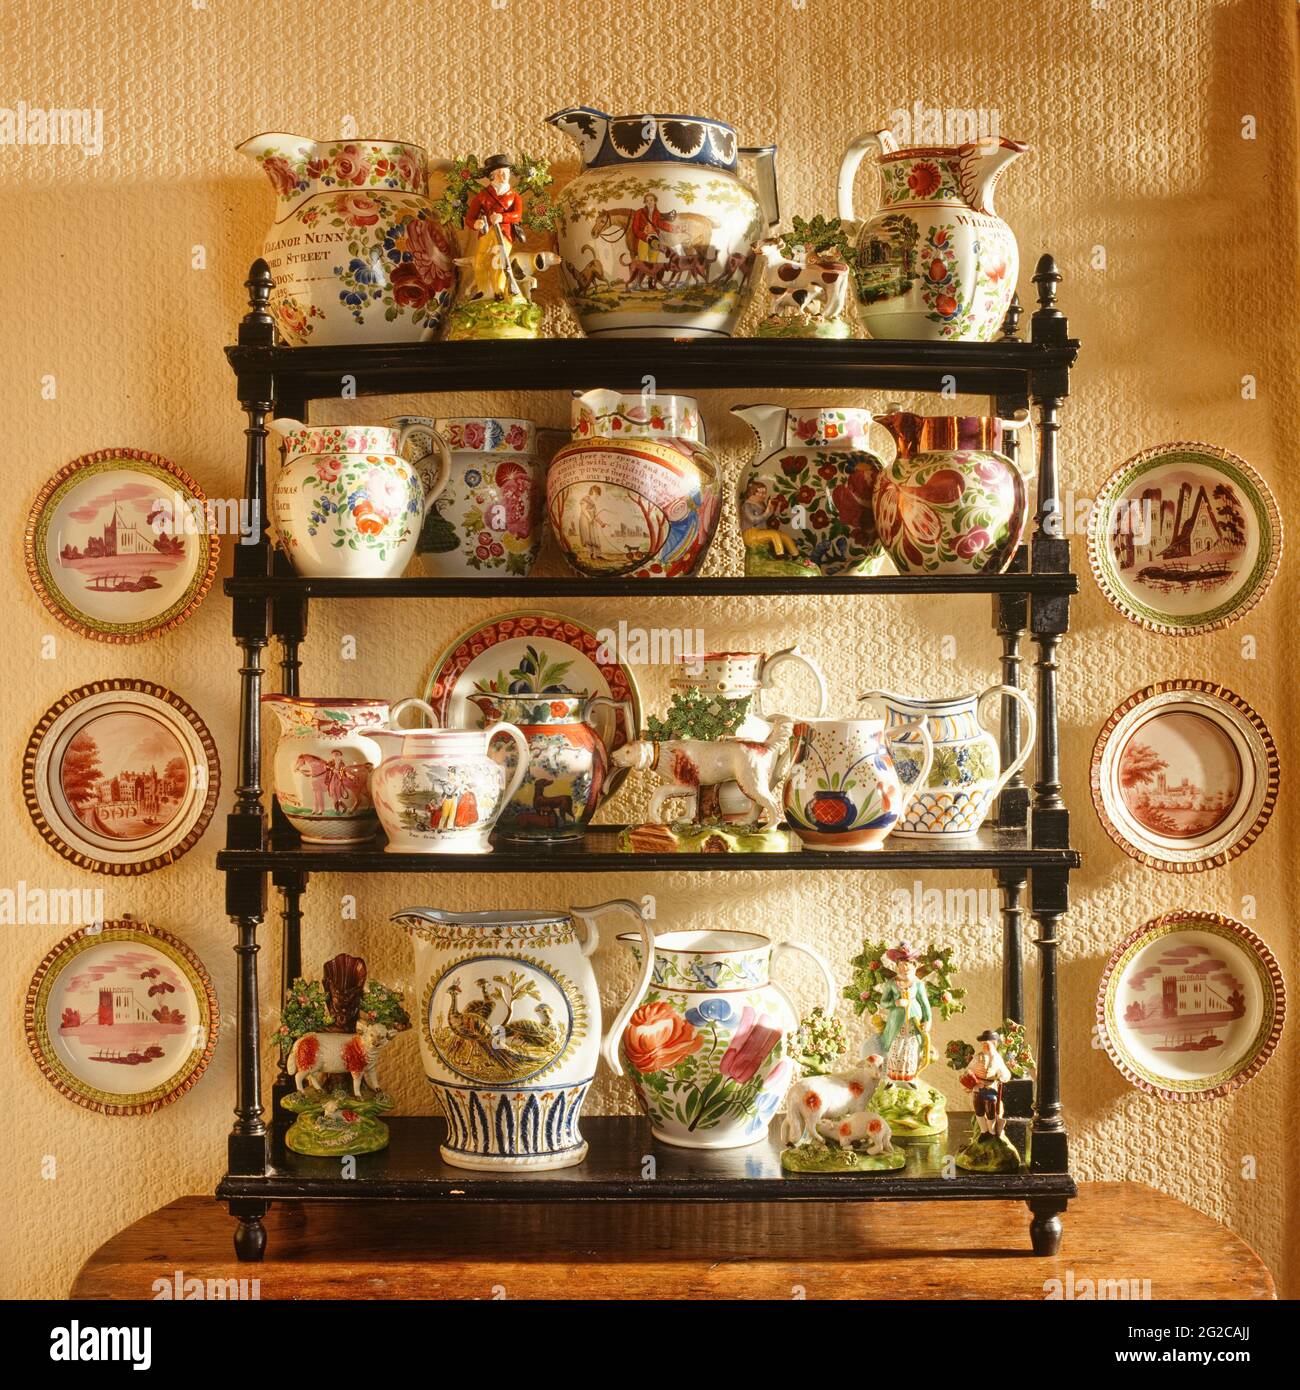 Vintage tableware on shelves Stock Photo